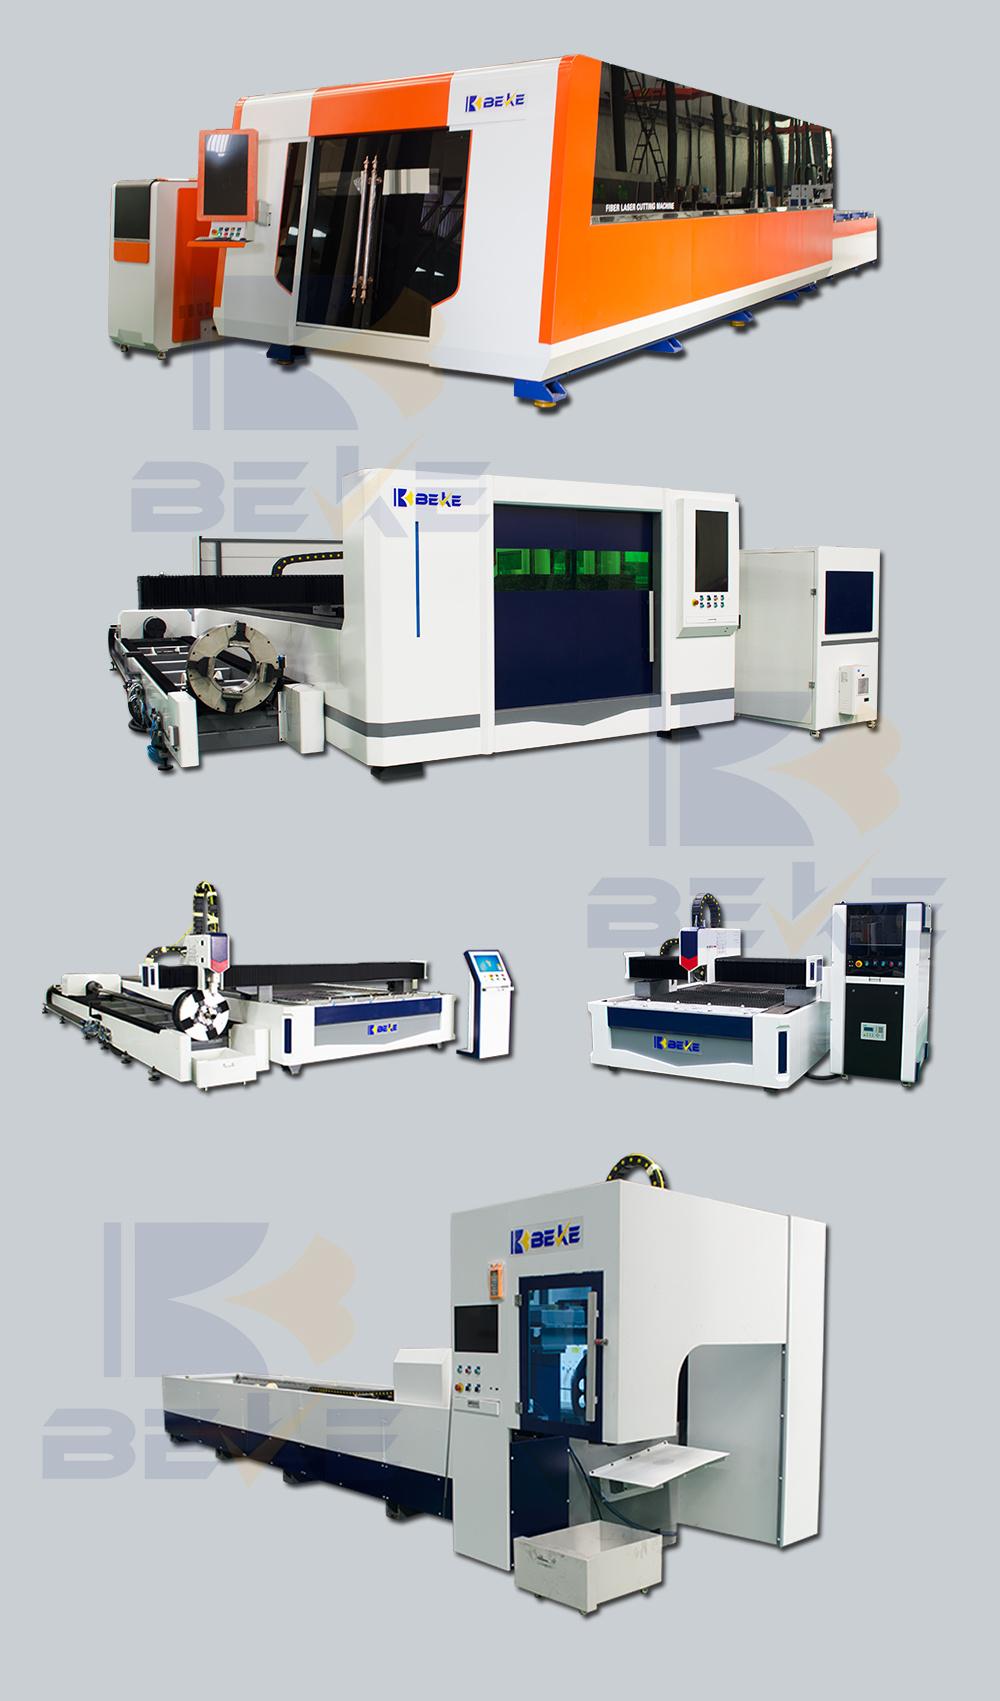 Bk4020 CNC Fiber Laser Cutter for Steel Sheet Fiber Laser Cutting Machine Sale Online